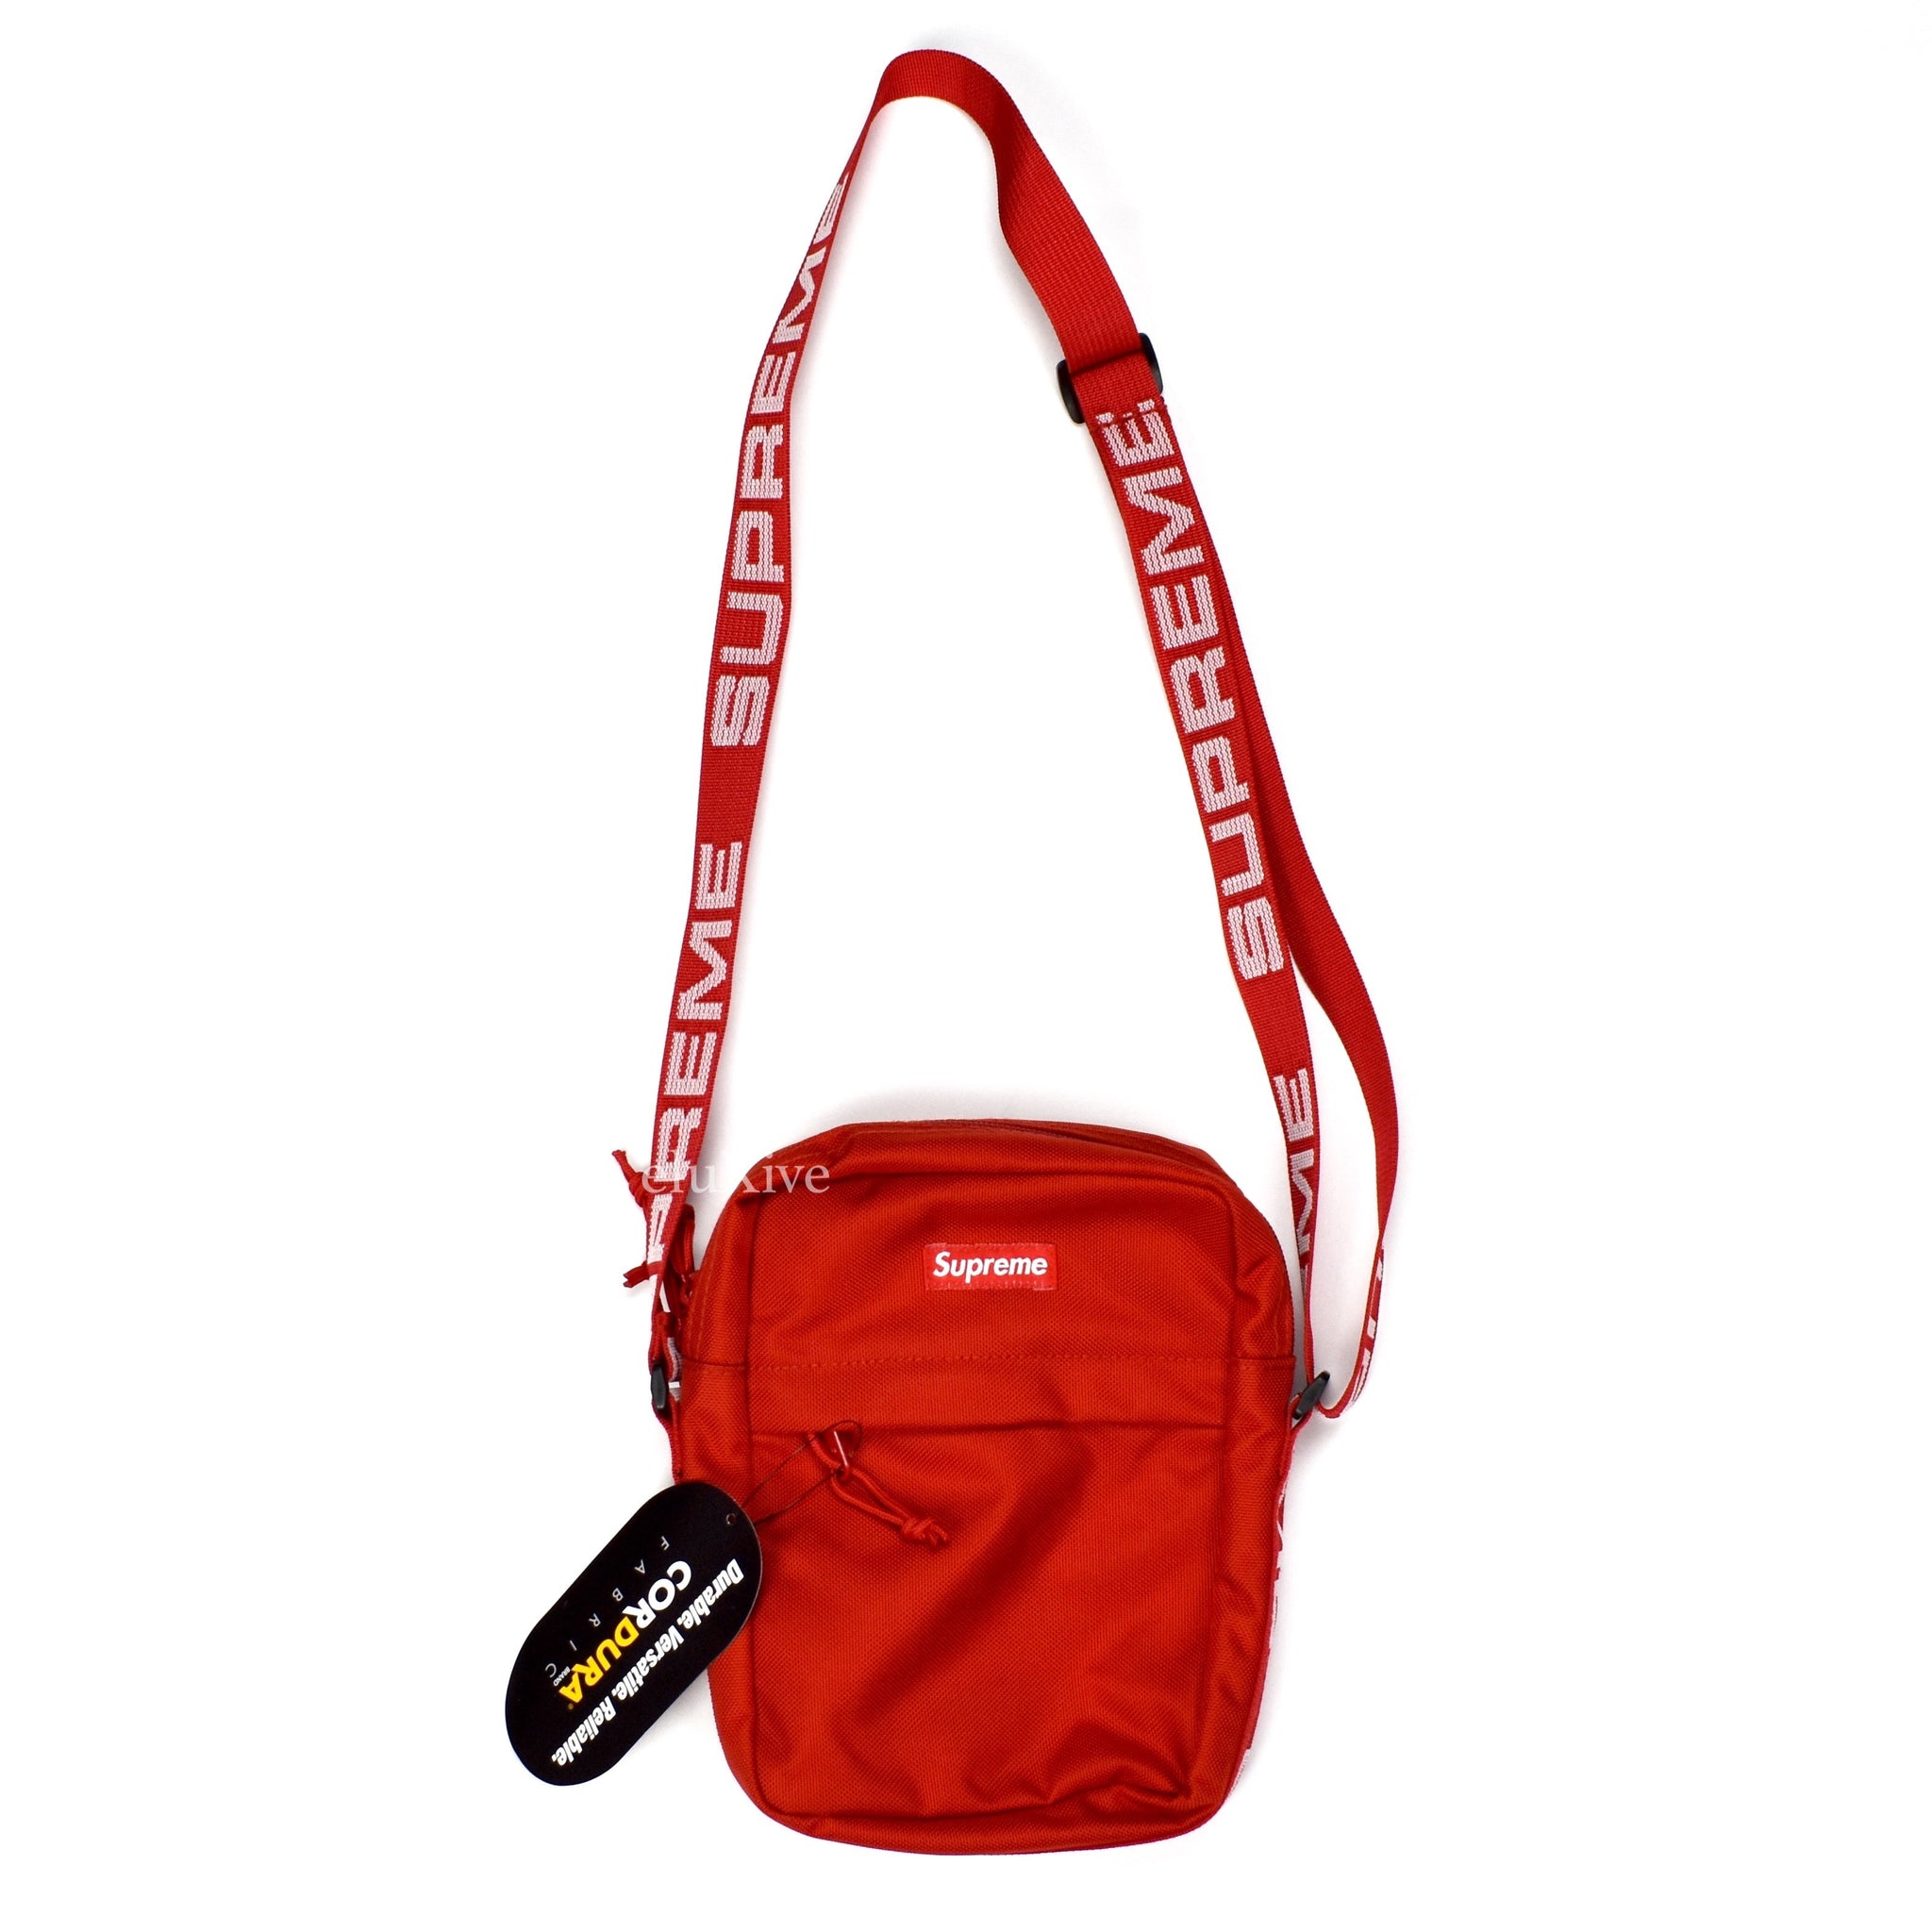 Сумка supreme. Сумка Supreme ss18. Сумка Supreme Cordura. Supreme ss21 Shoulder Bag. Supreme Shoulder Bag ss18.